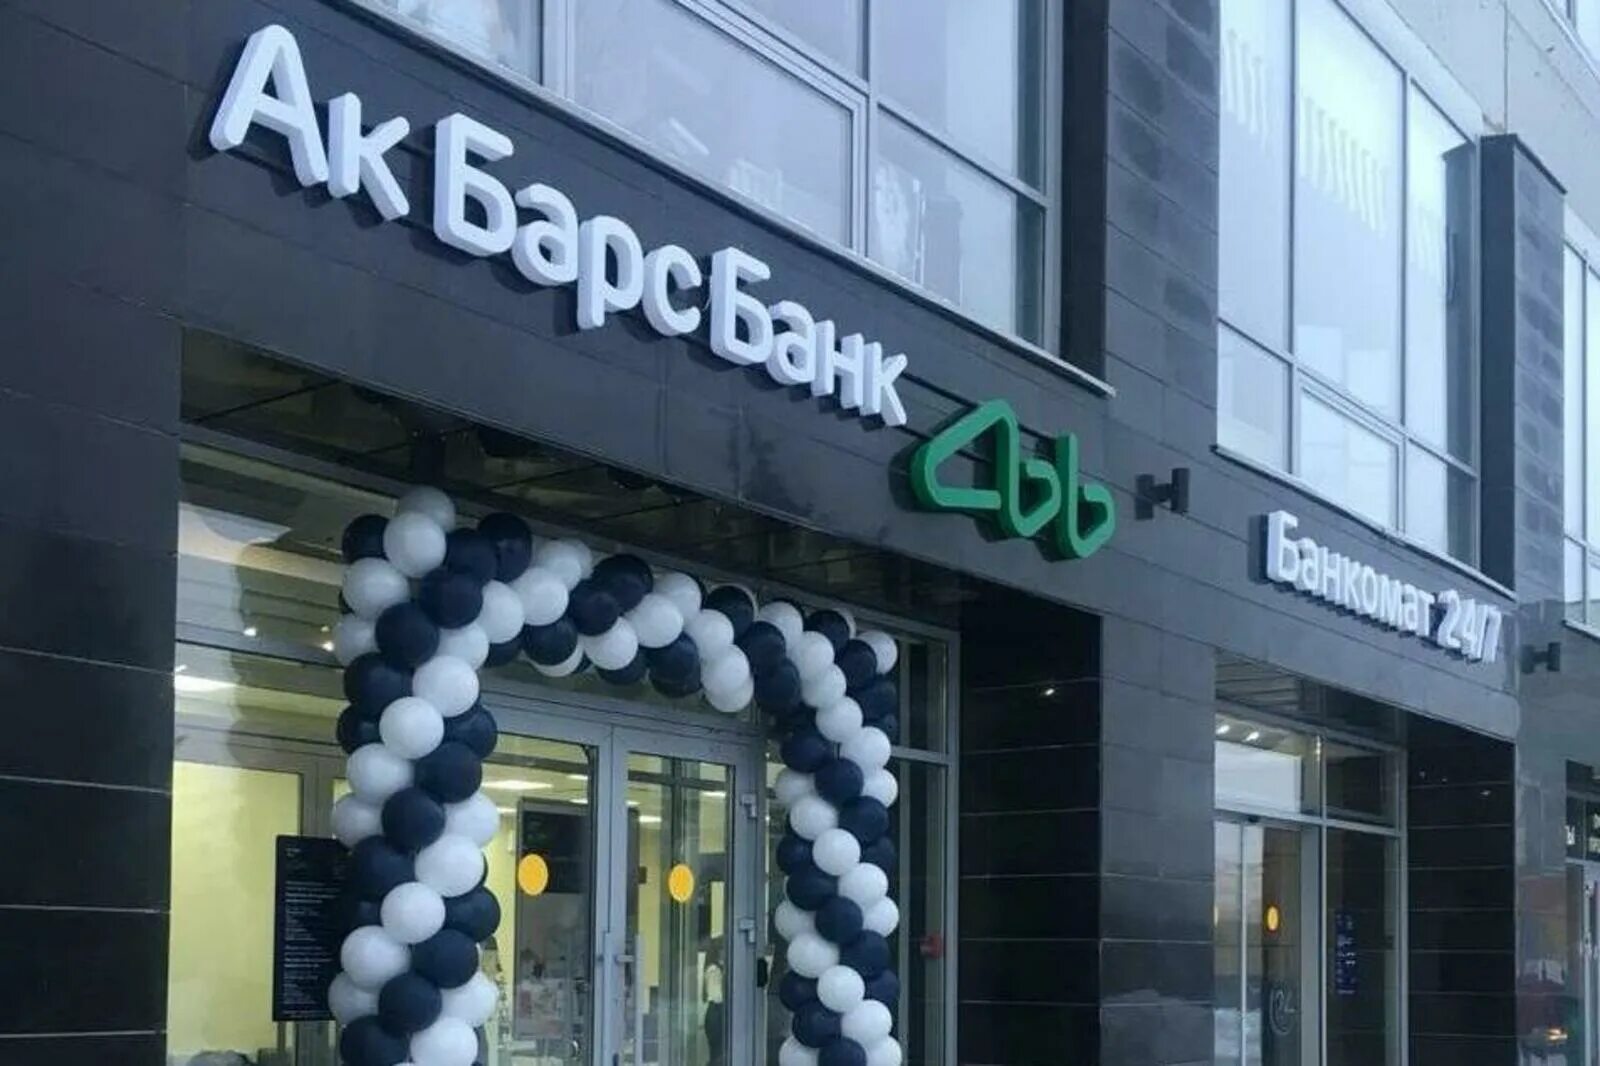 АК Барс банк офис. АК Барс банк Уфа. АК Барс банк новый офис. Акбарсбанк банк фото.